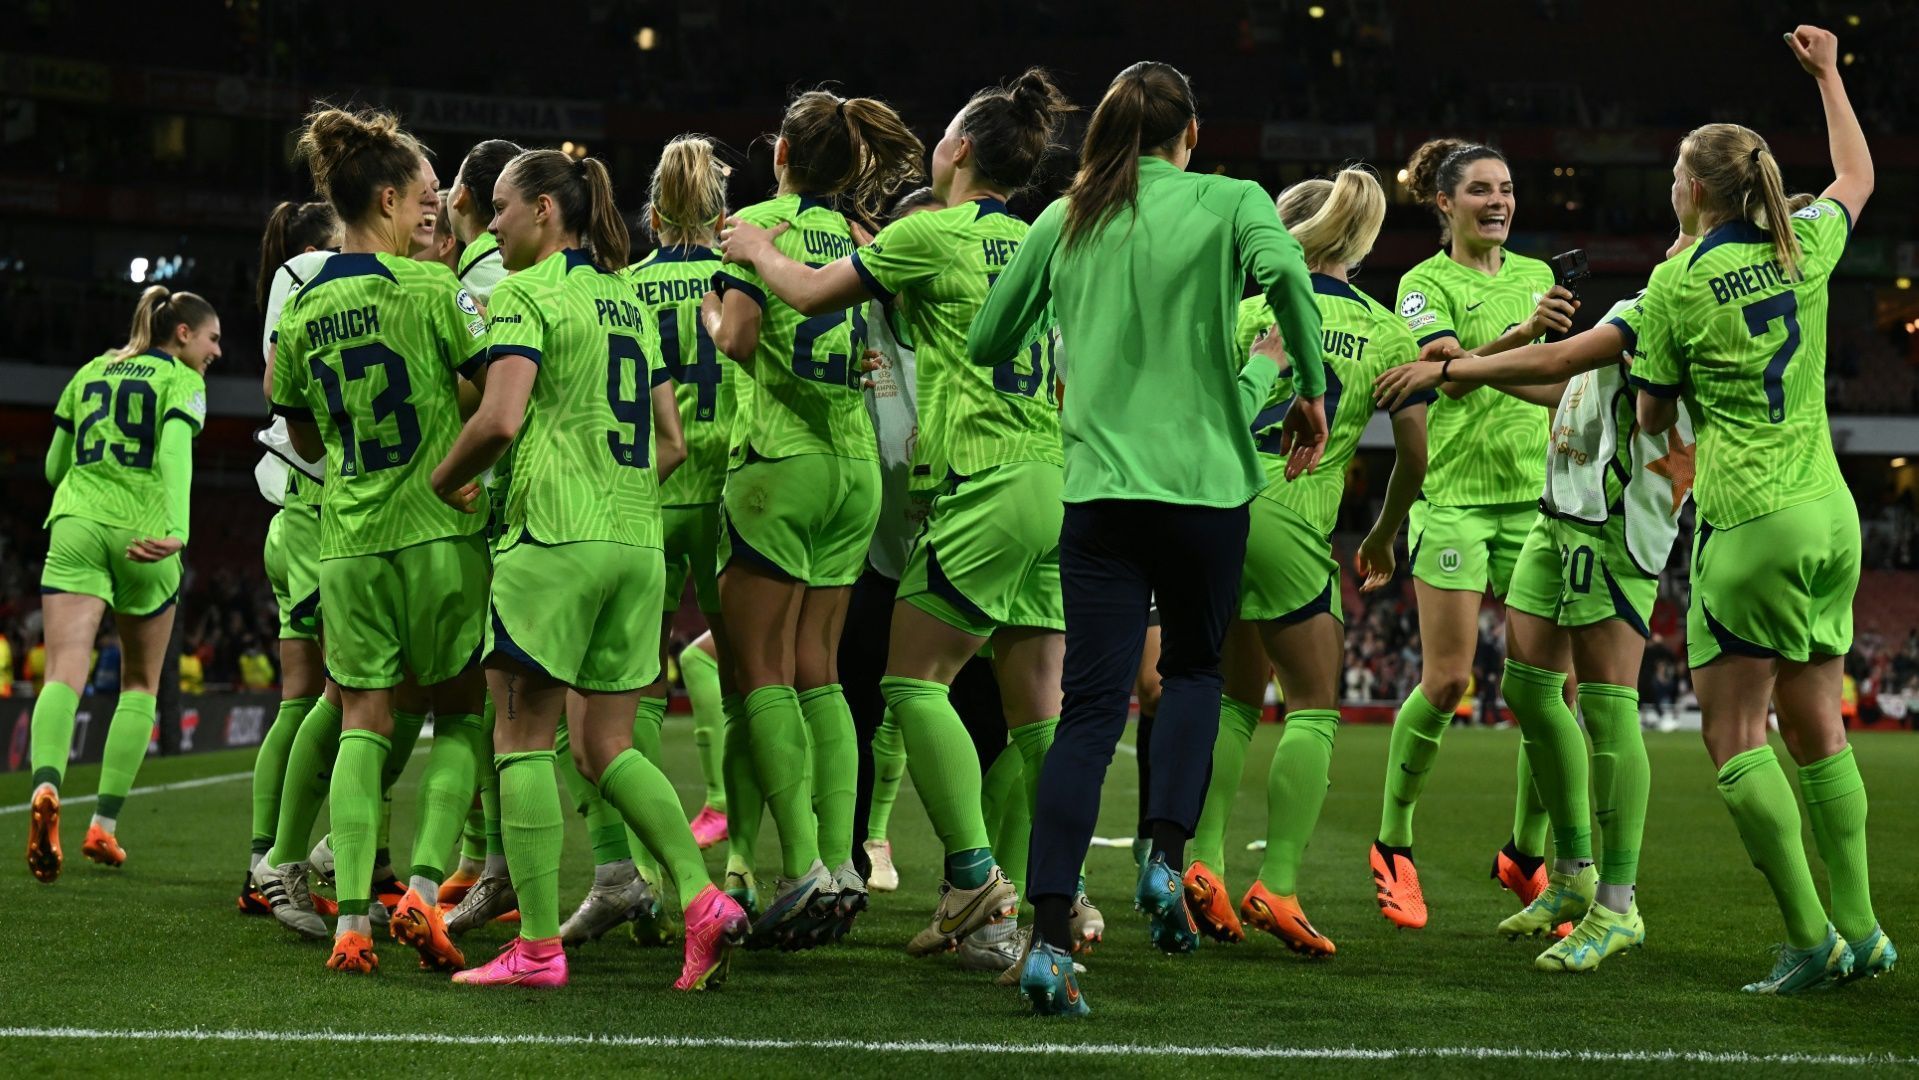 Champions-League-Finale der Frauen ausverkauft